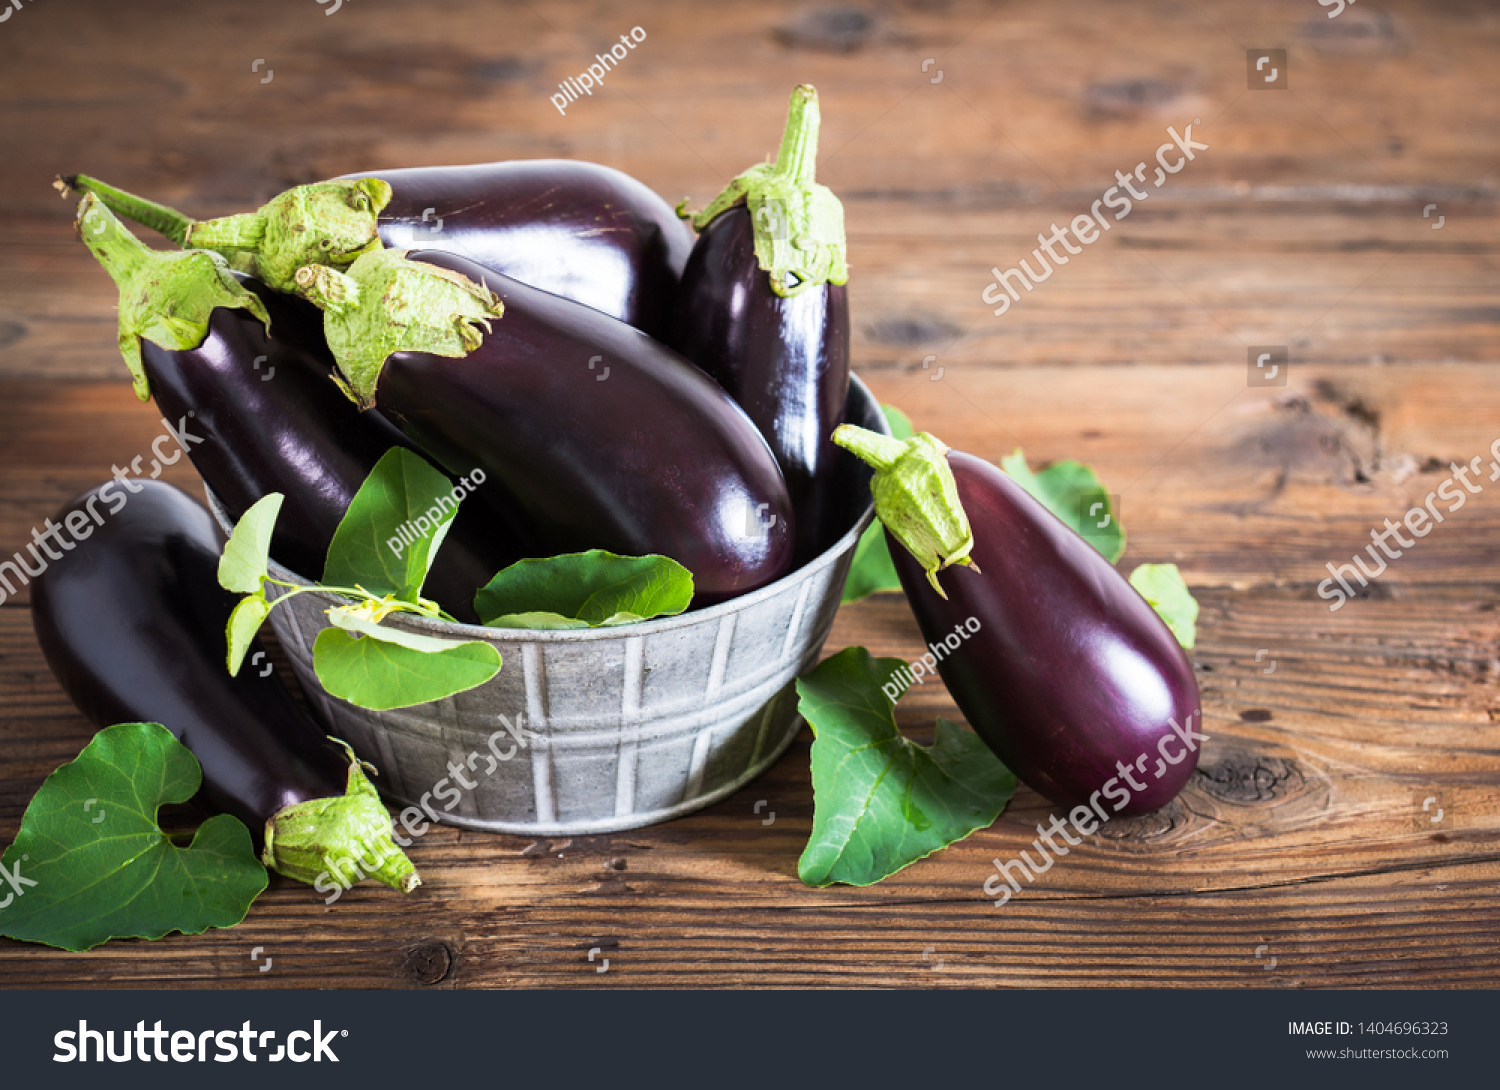 Frsh organic eggplant on the table #1404696323